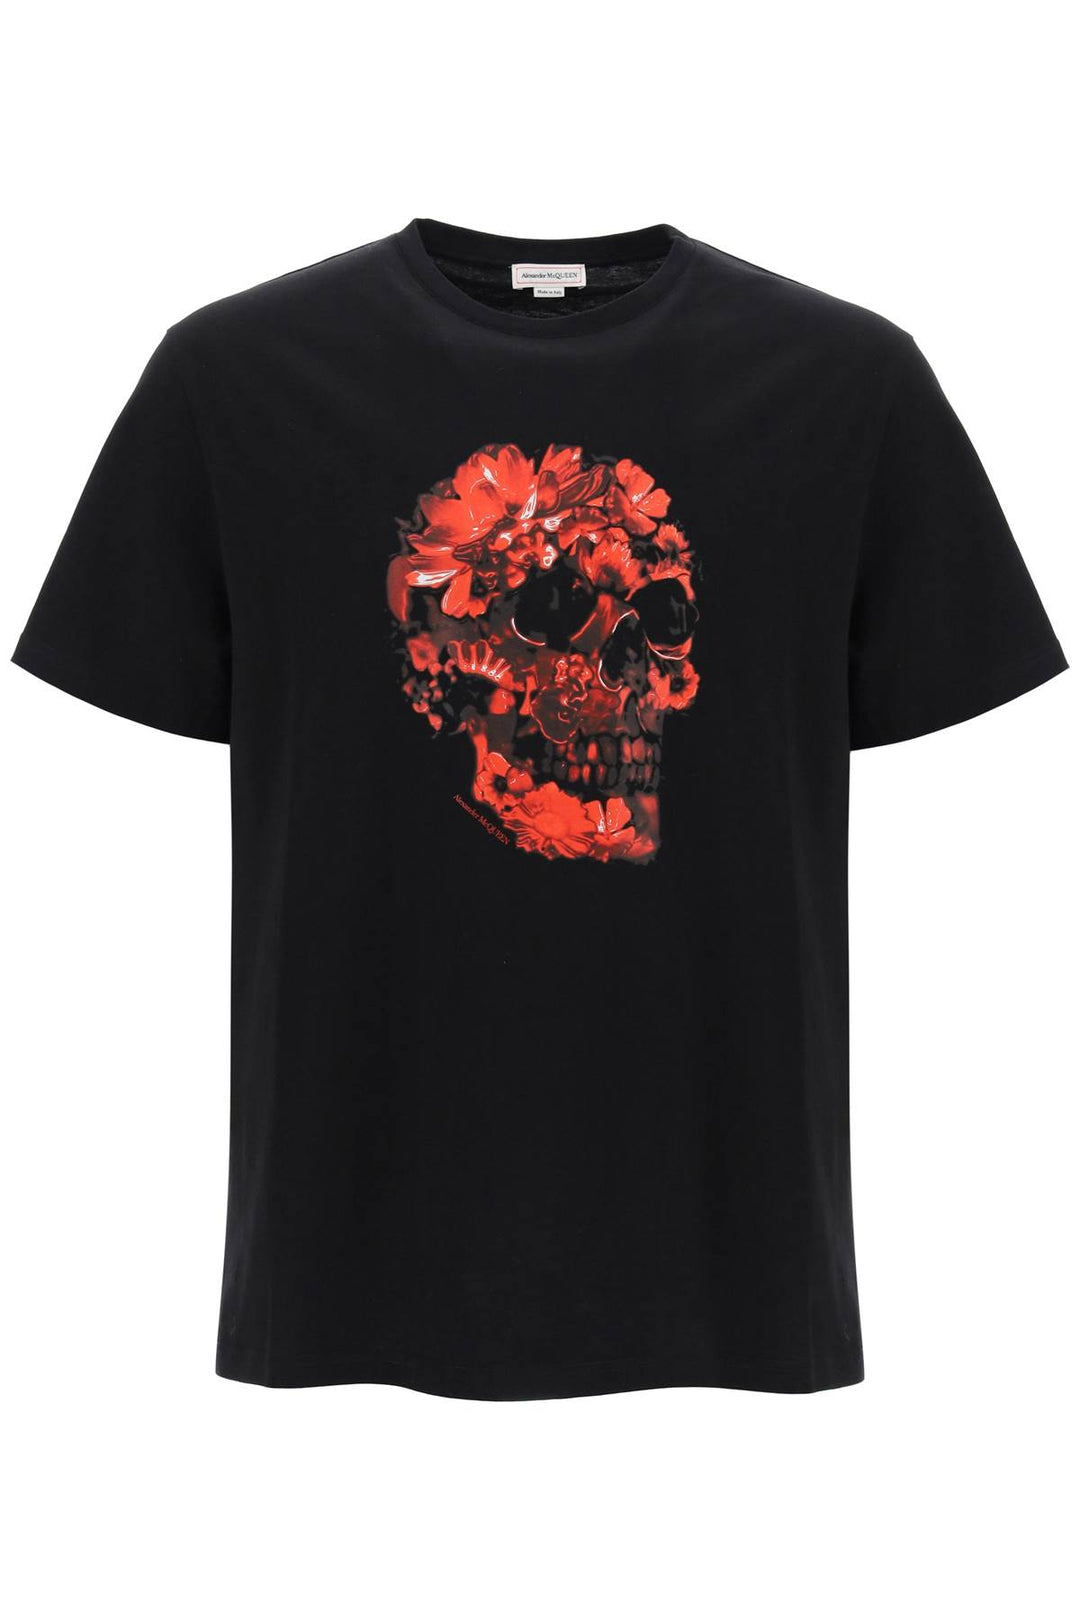 wax flower skull printed t-shirt-0